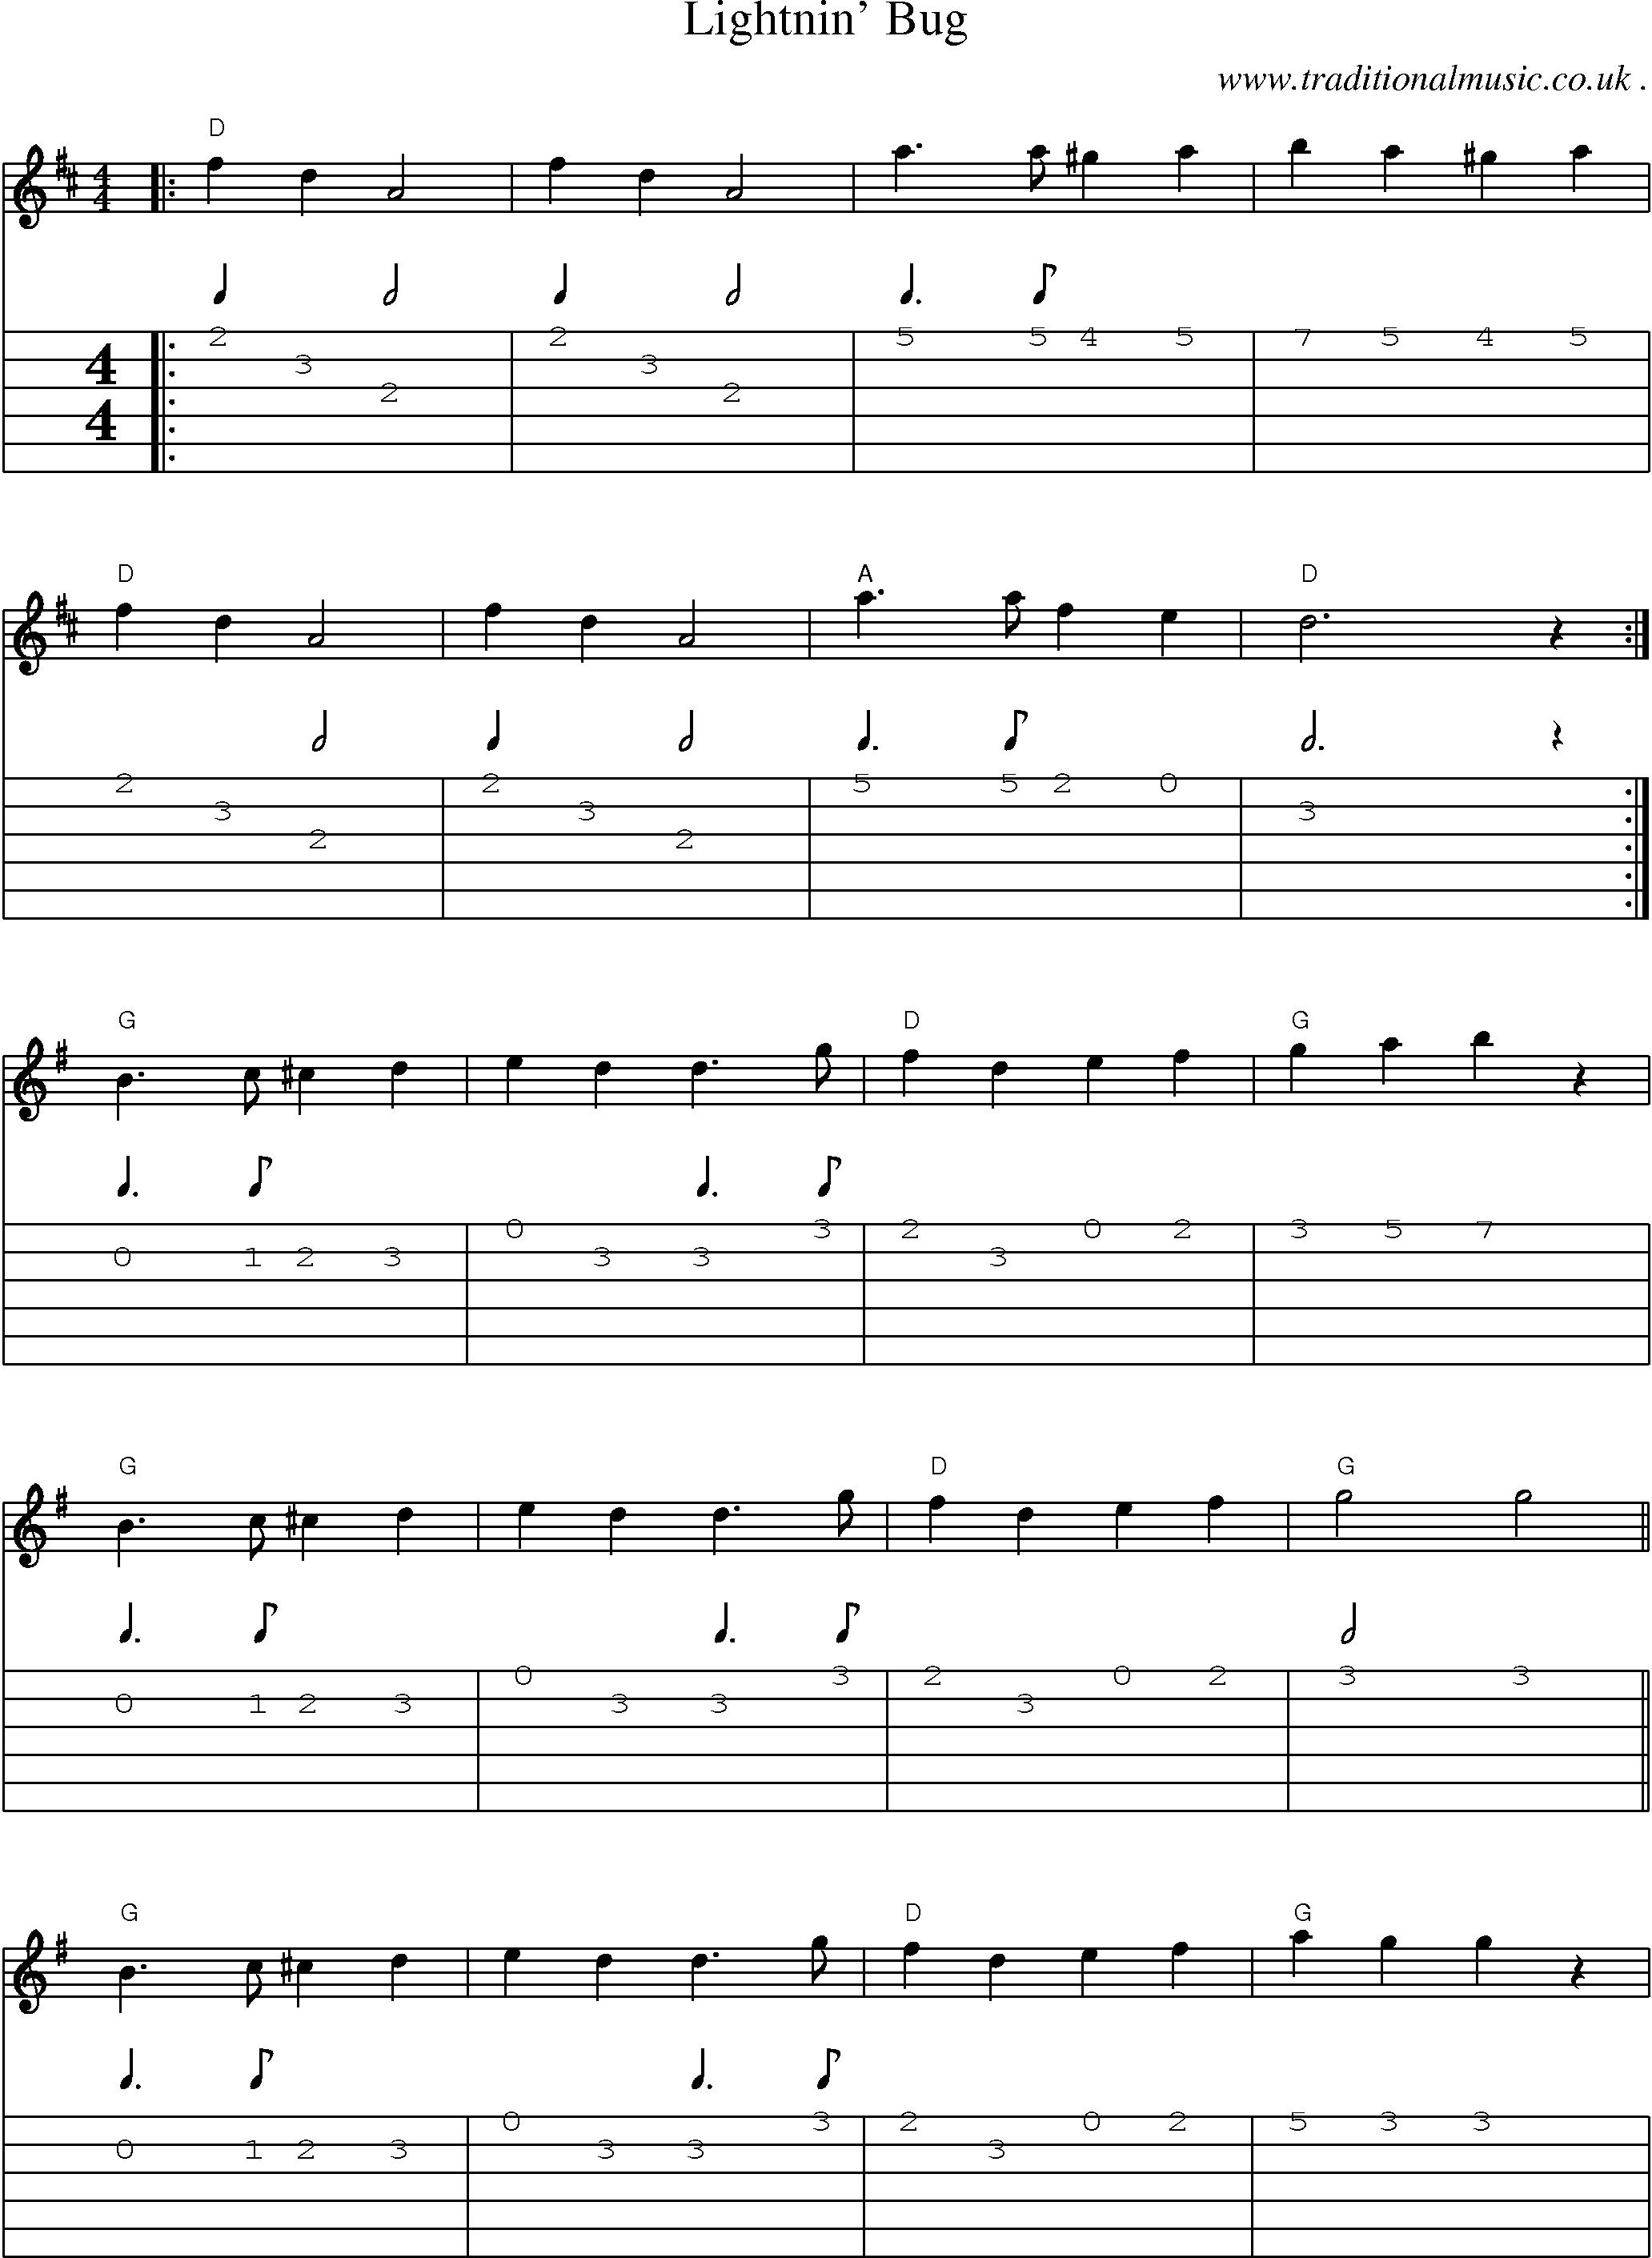 Music Score and Guitar Tabs for Lightnin Bug